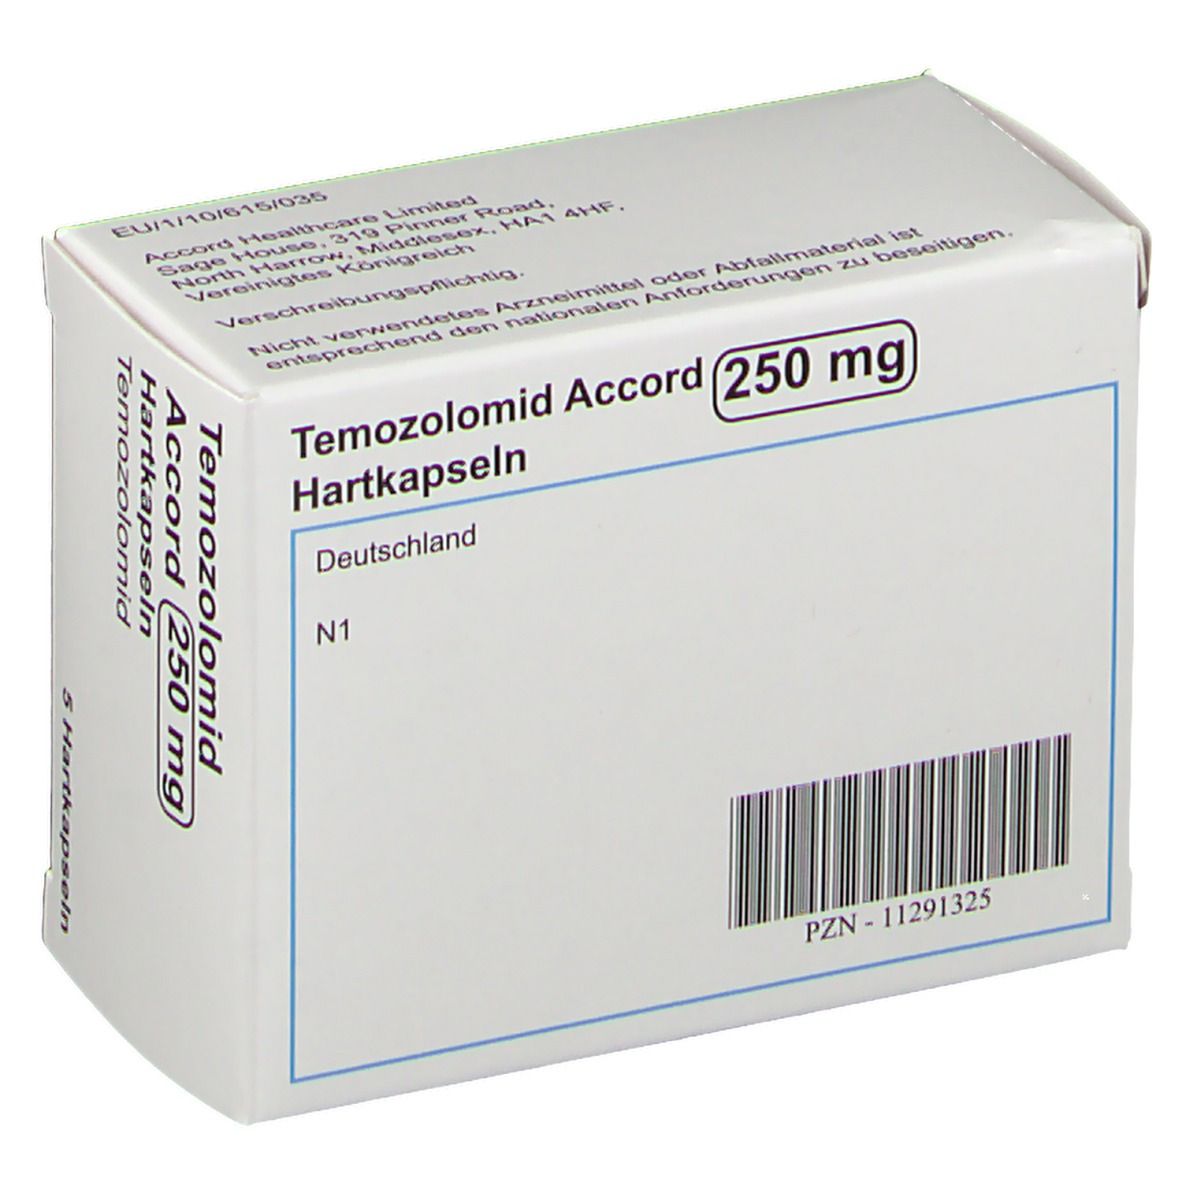 Temozolomid Accord 250 mg